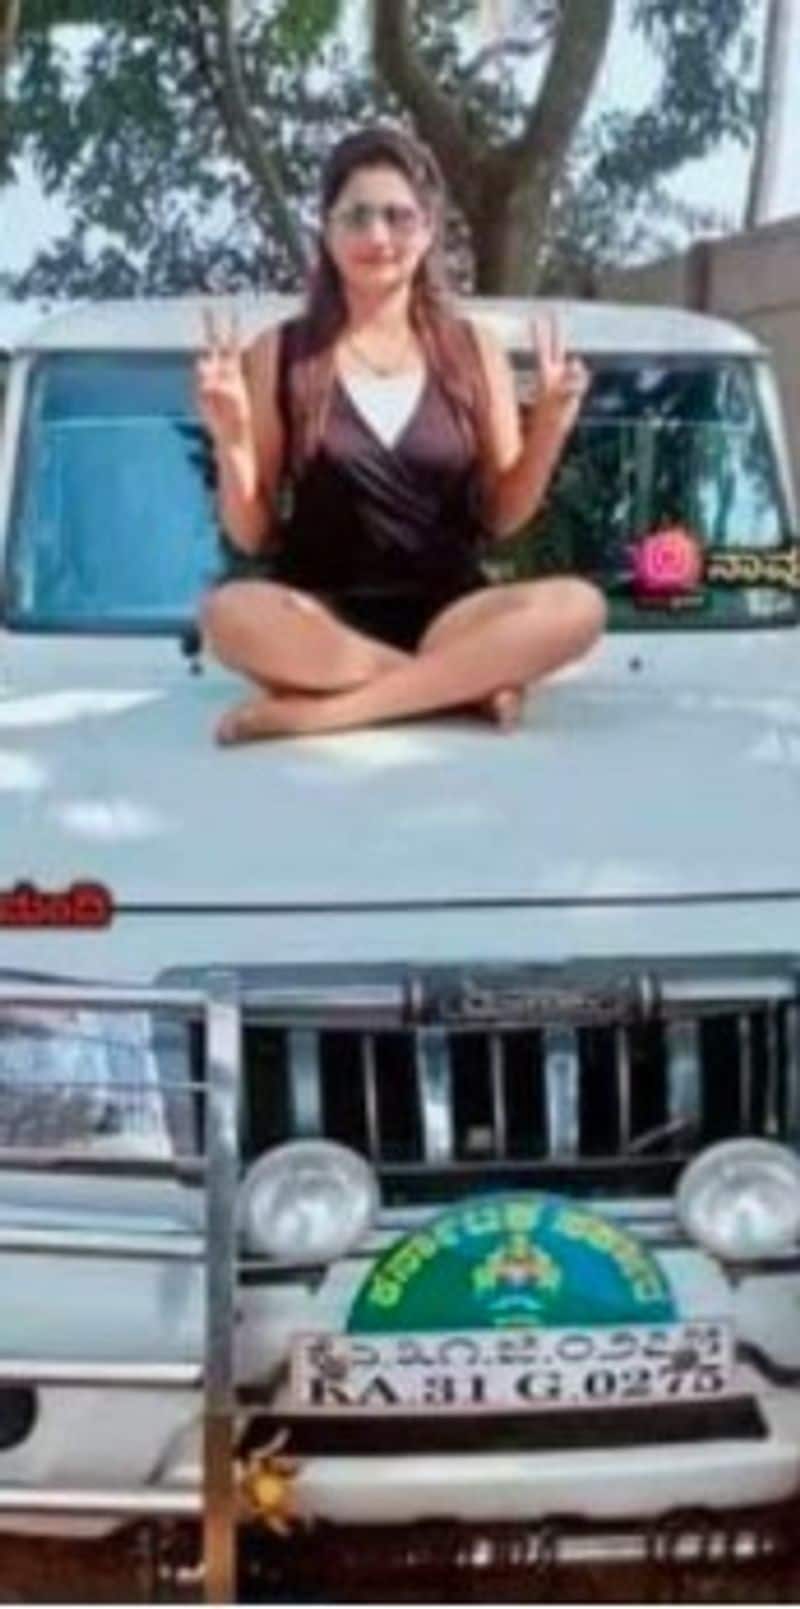 Girl Misusing Govt Vehicle At Karwar Pictures Goes Viral Complaint Lodged pod